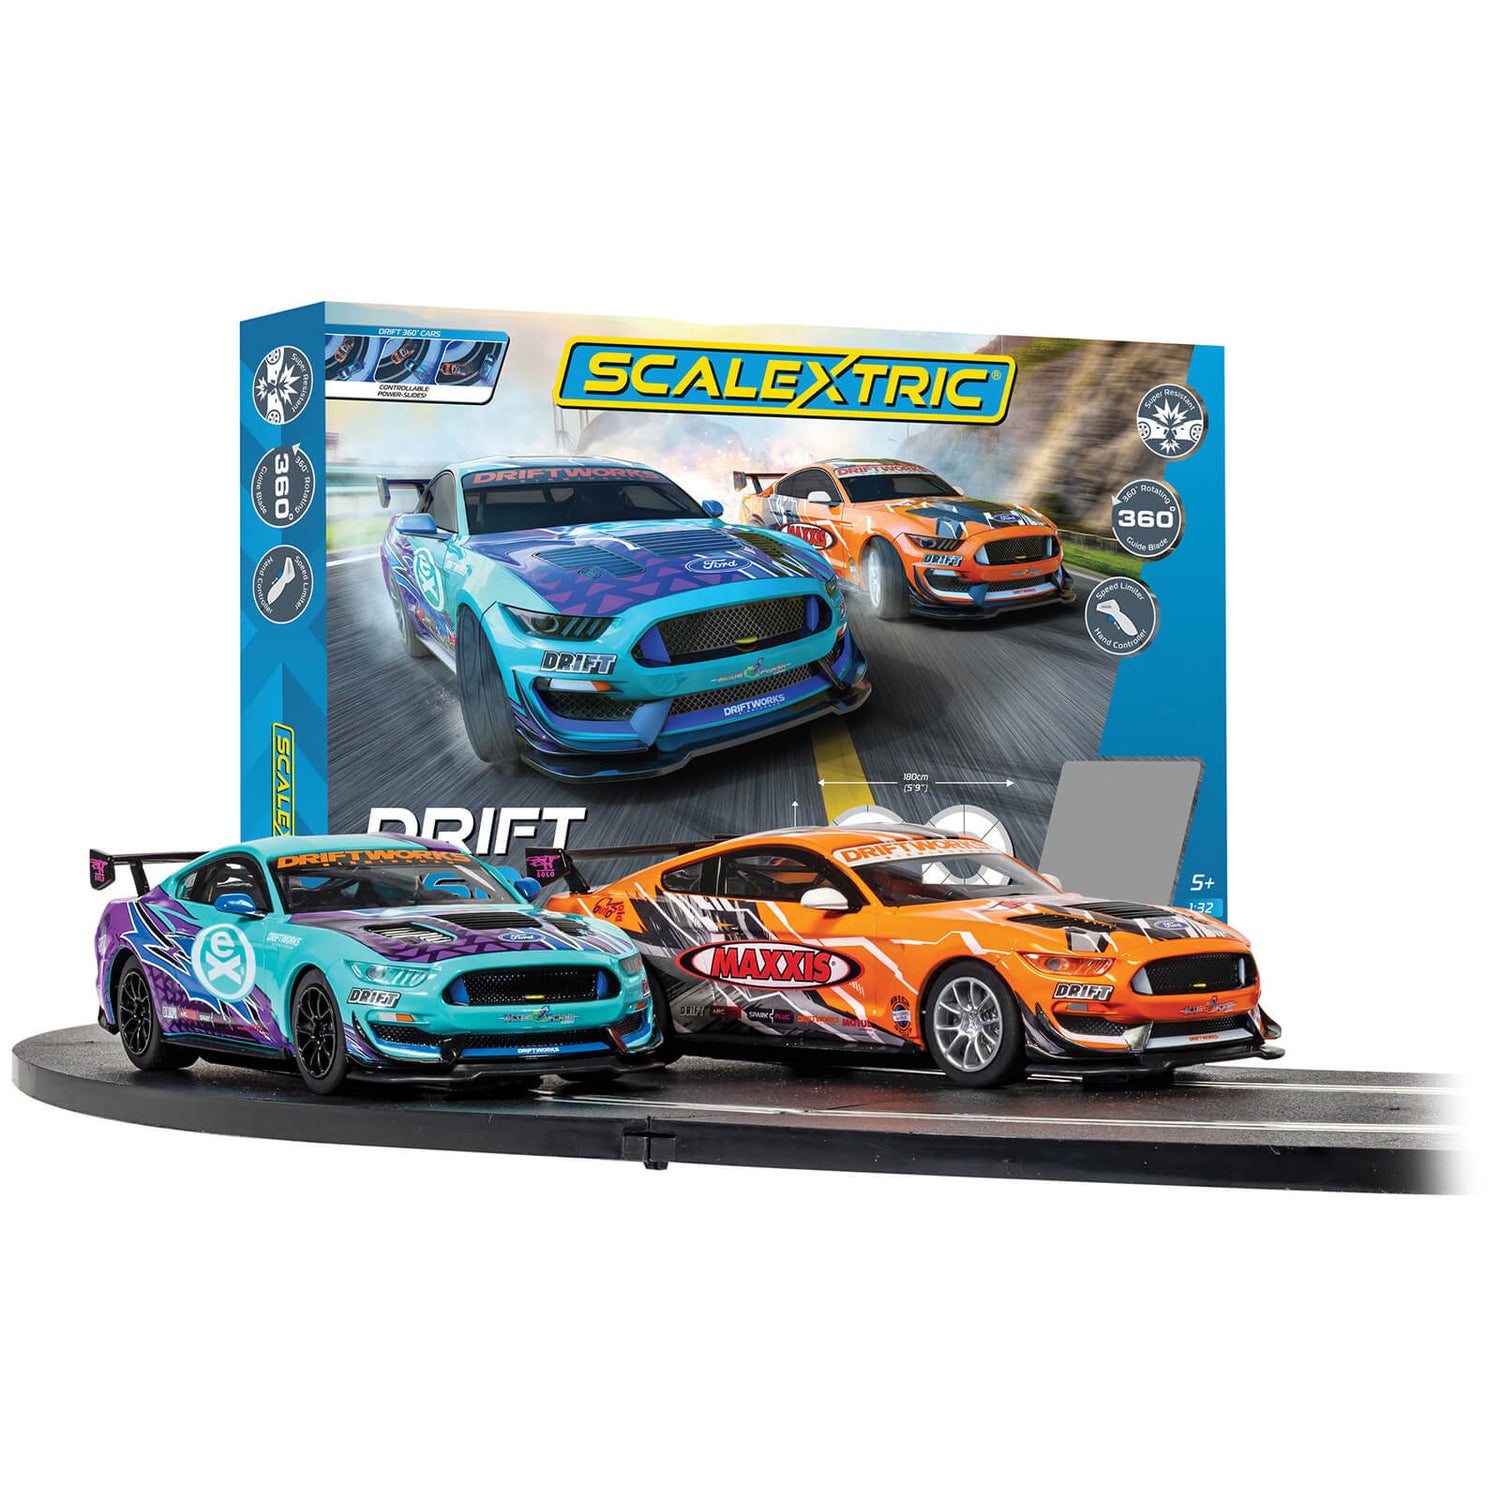 Scalextric Drift 360 Race Set (1:32 Scale)